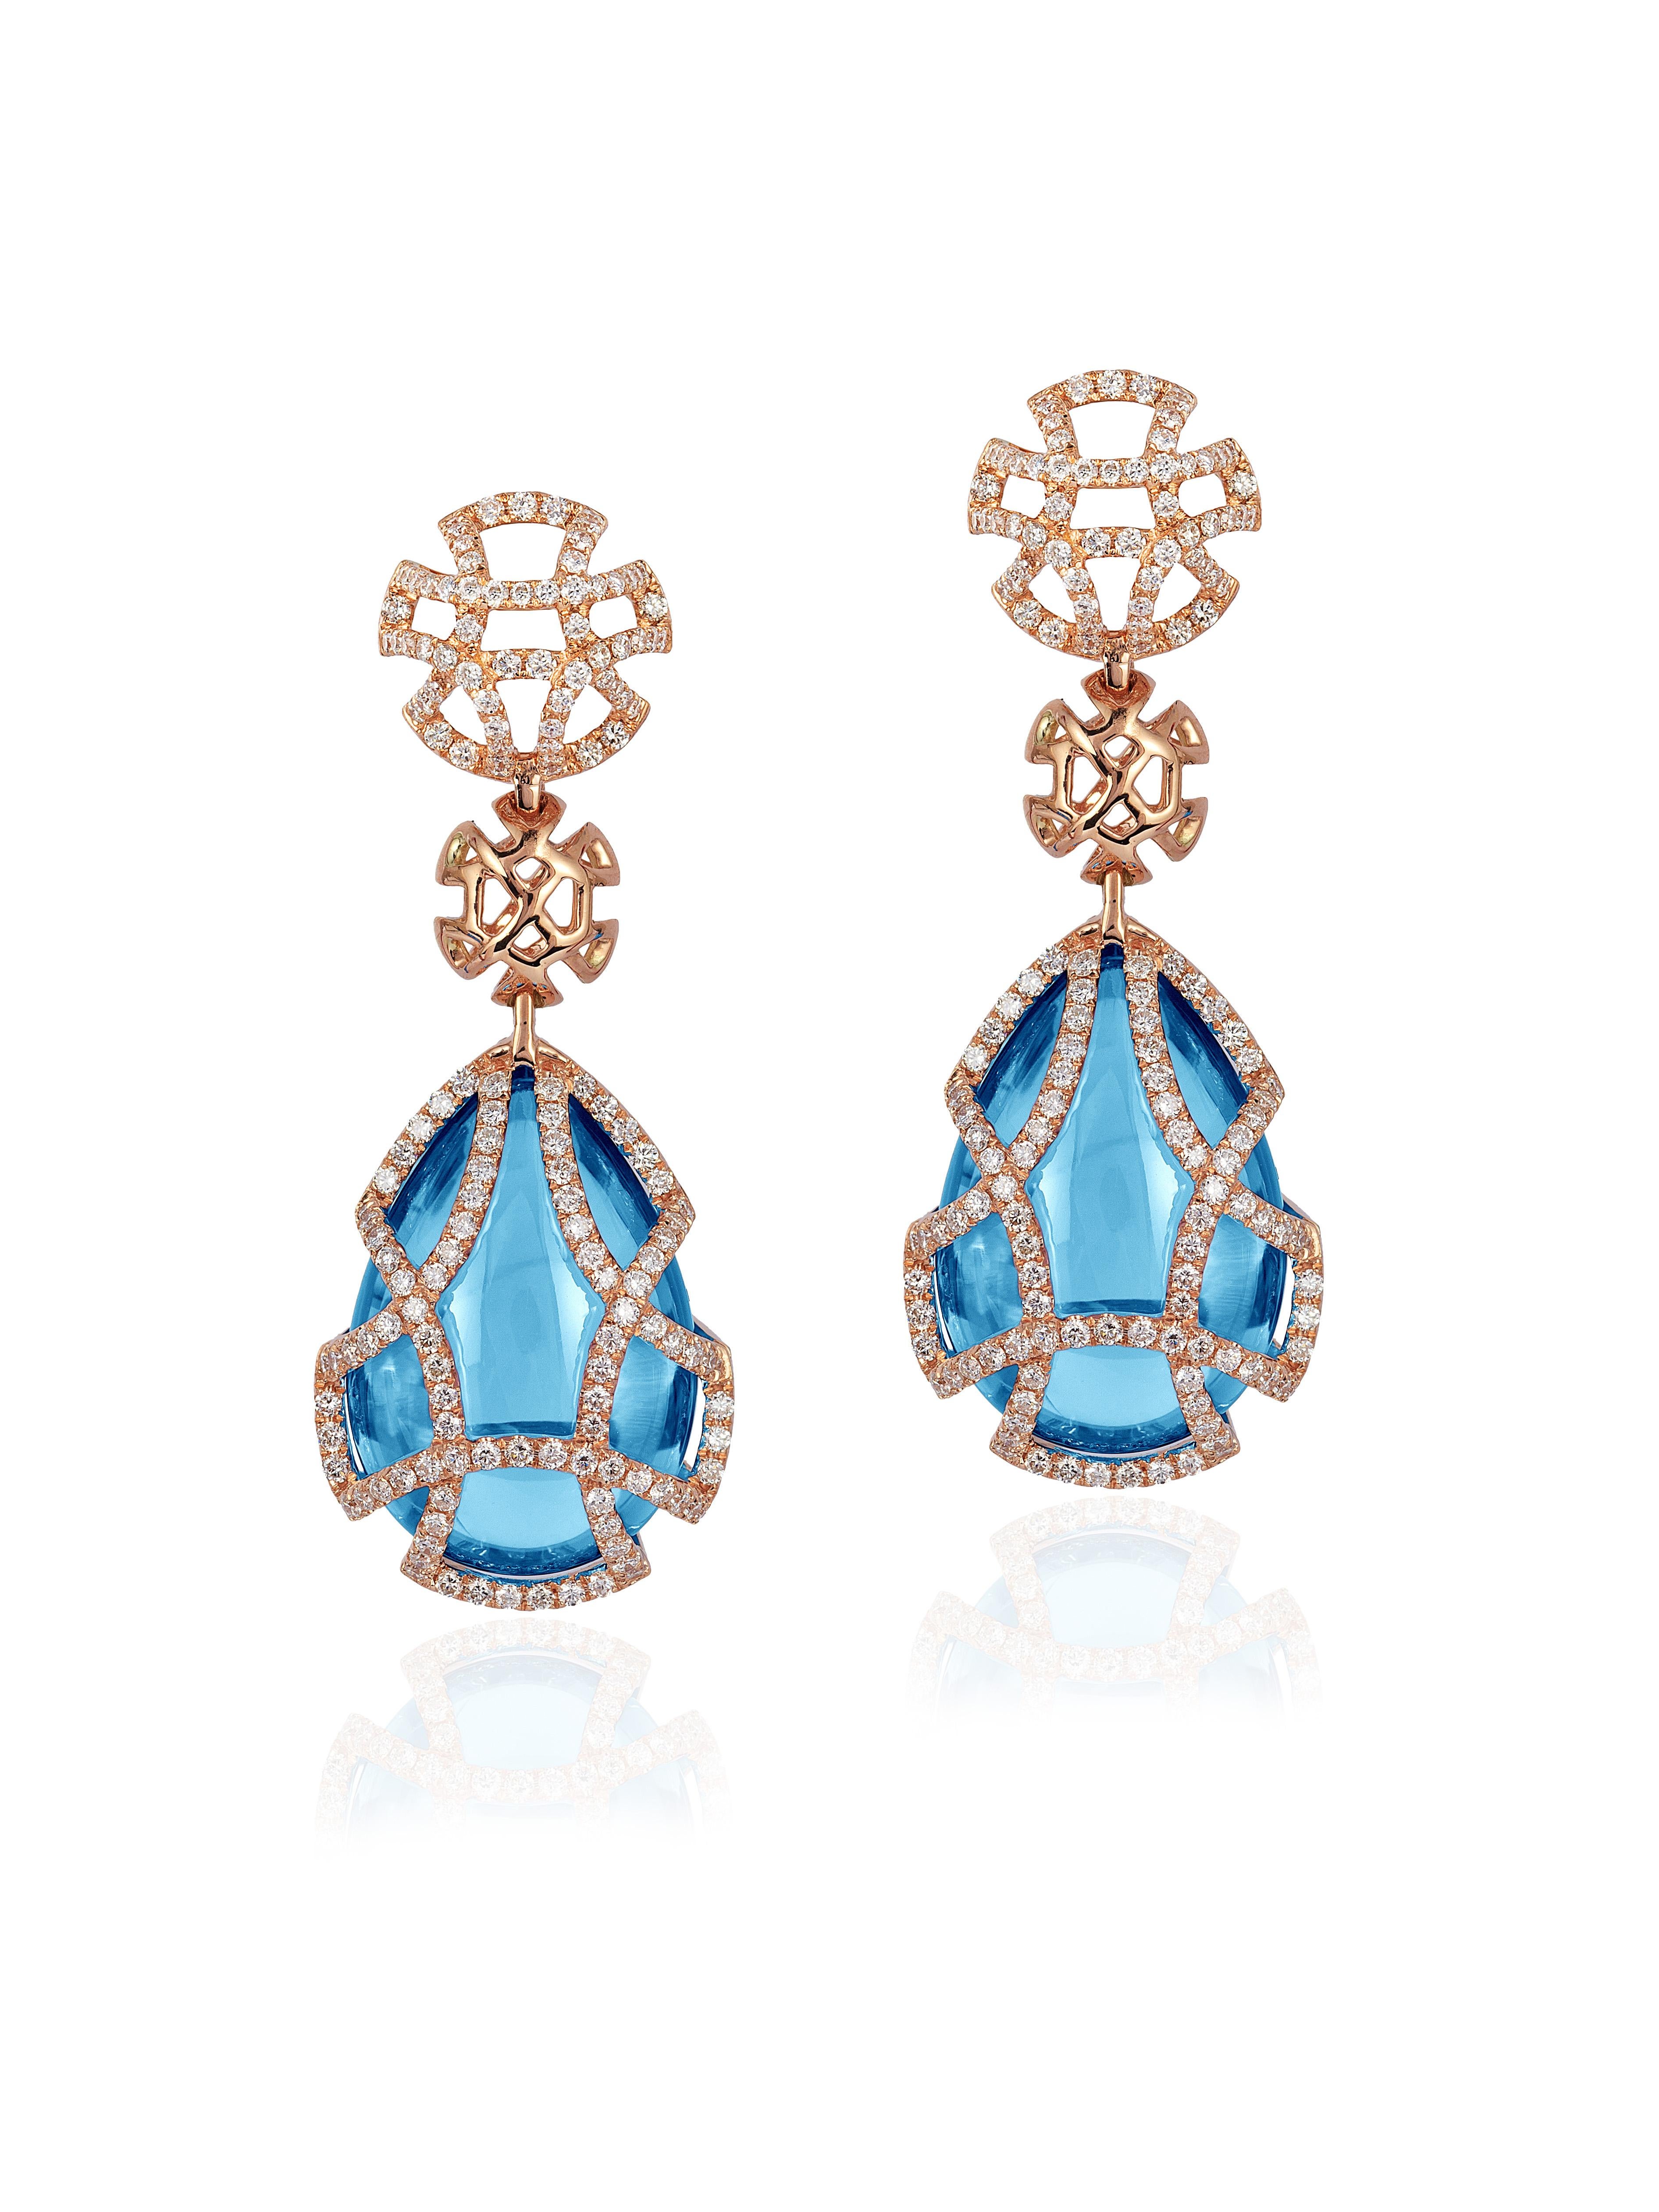 Pear Cut Goshwara Blue Topaz Teardrop Cage and Diamond Earrings For Sale